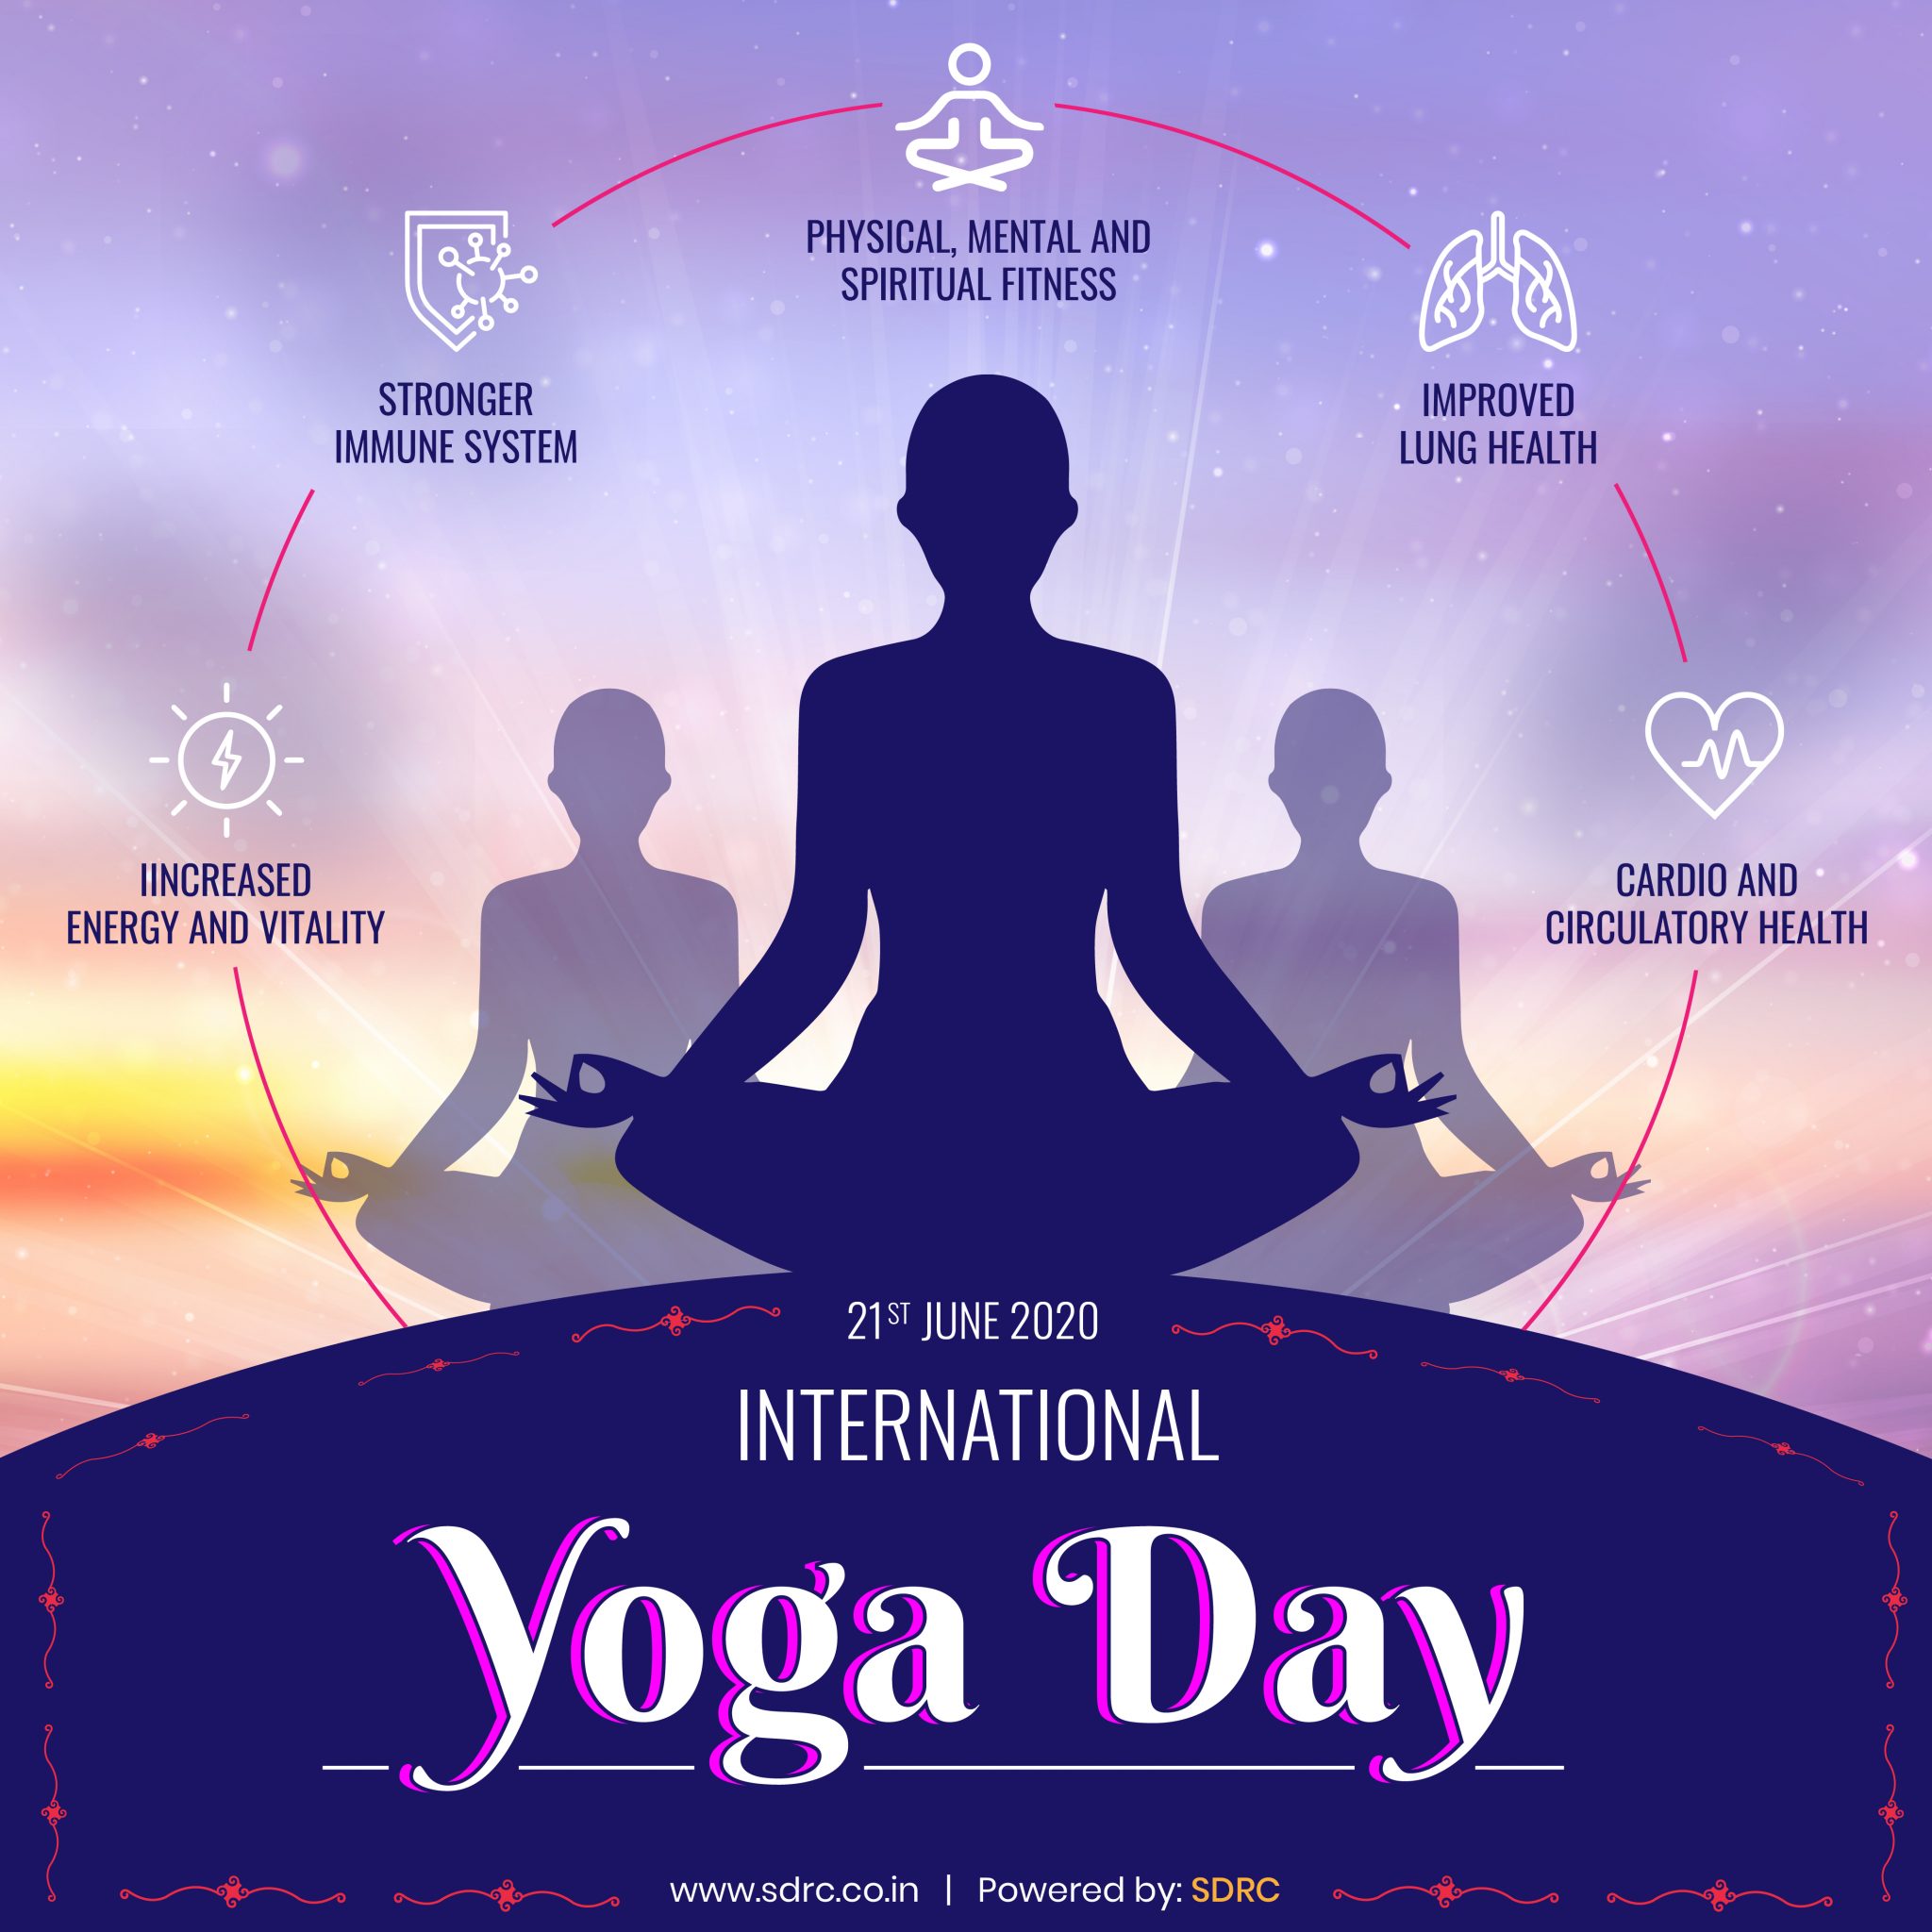 a speech on international yoga day